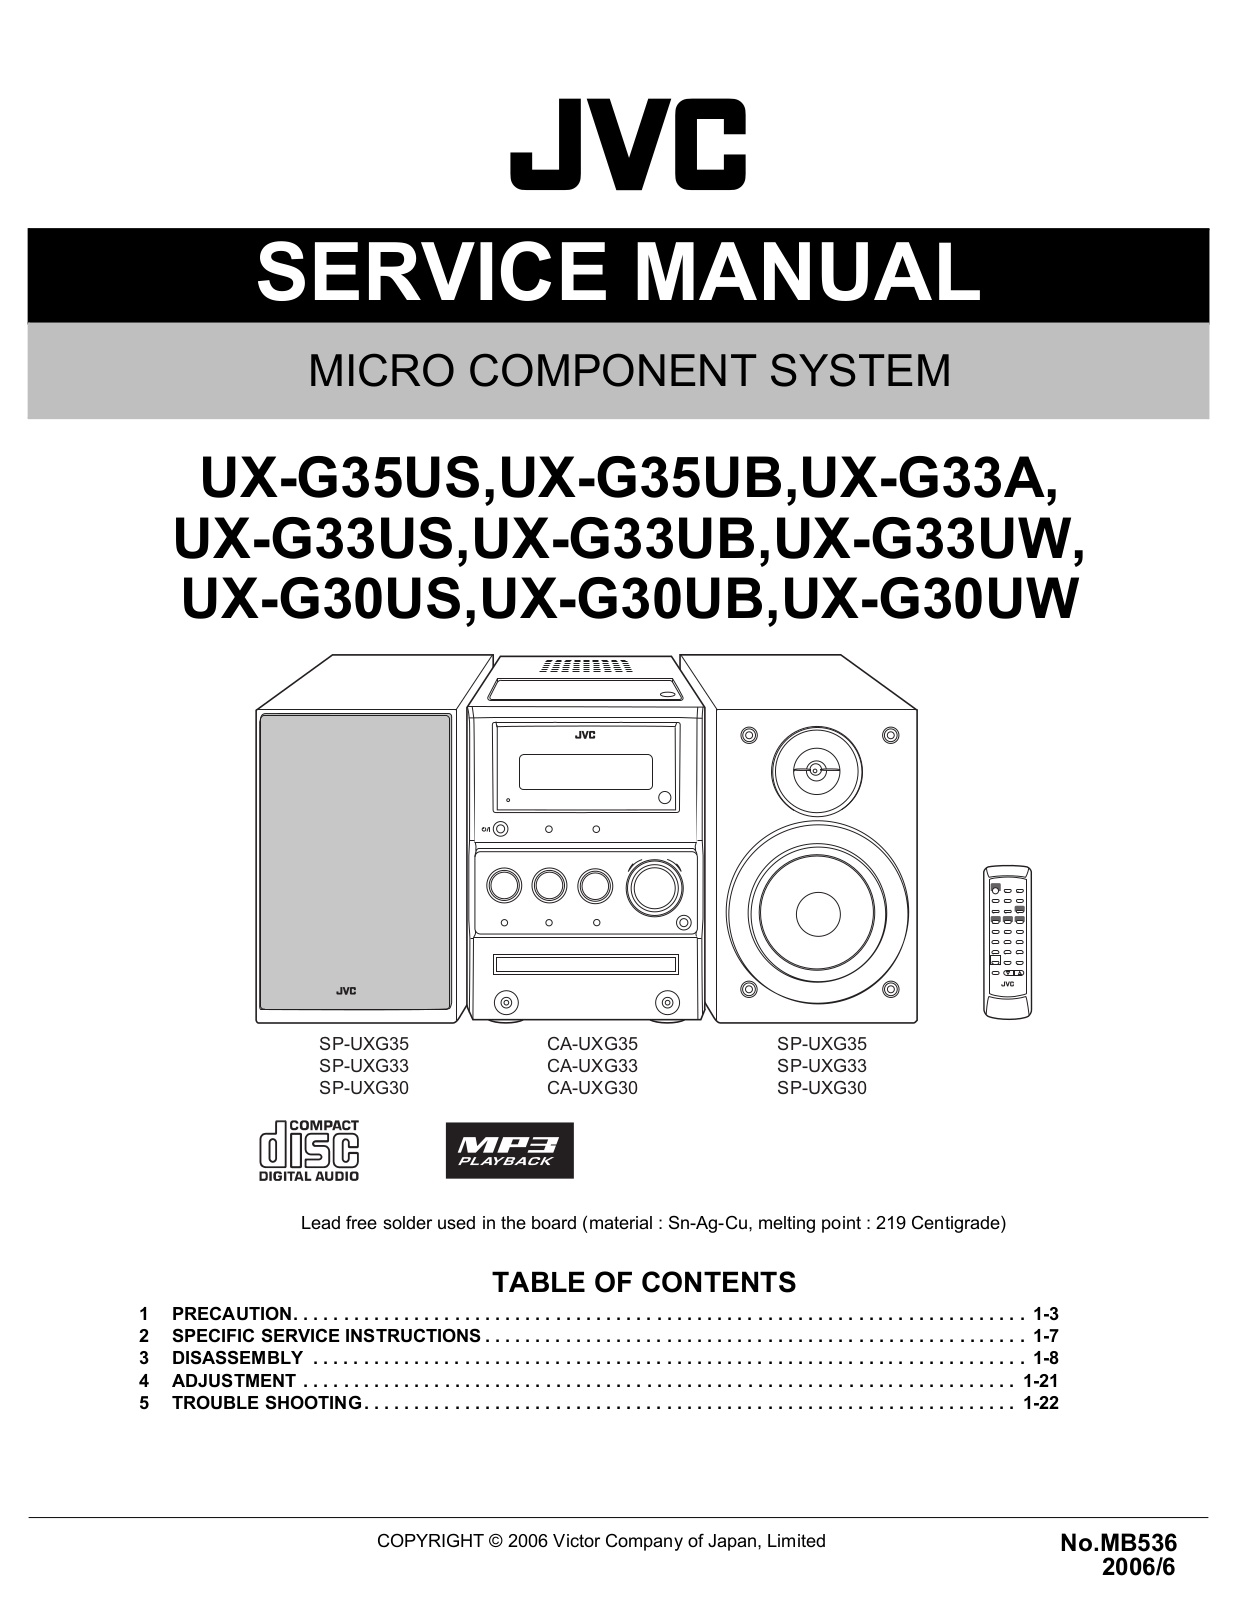 JVC UXG-30, UXG-33, UXG-35 Service manual